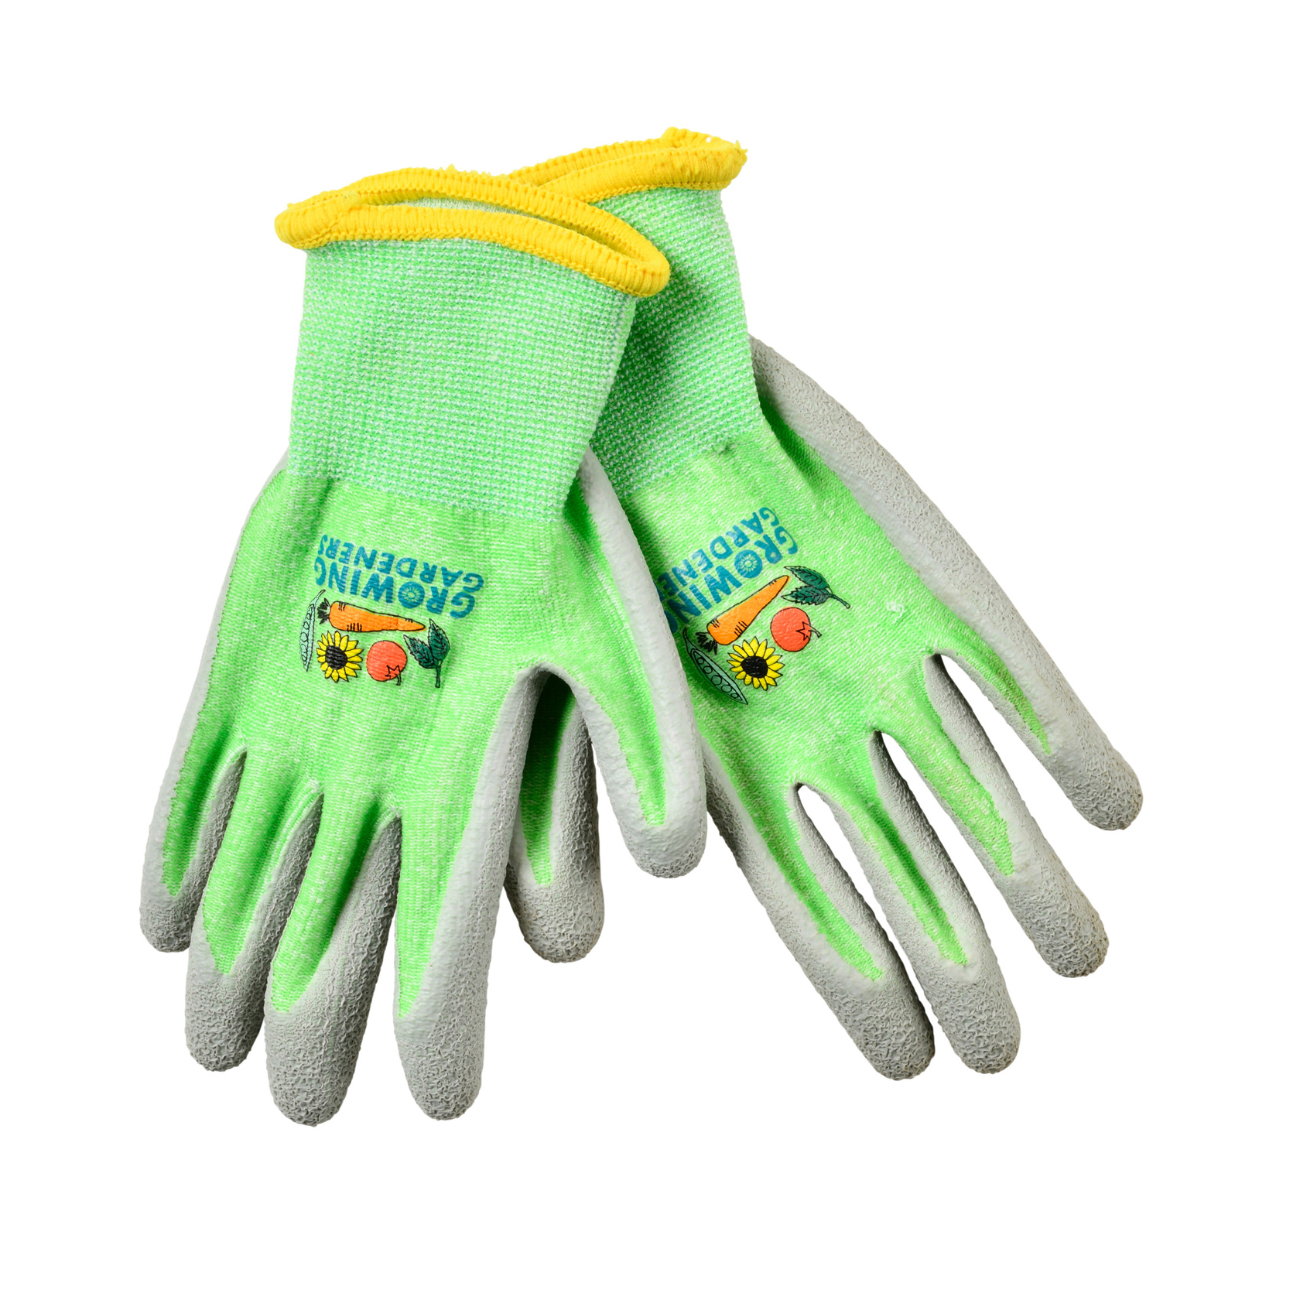 RHS Growing Gardeners Kids Gardening Gloves